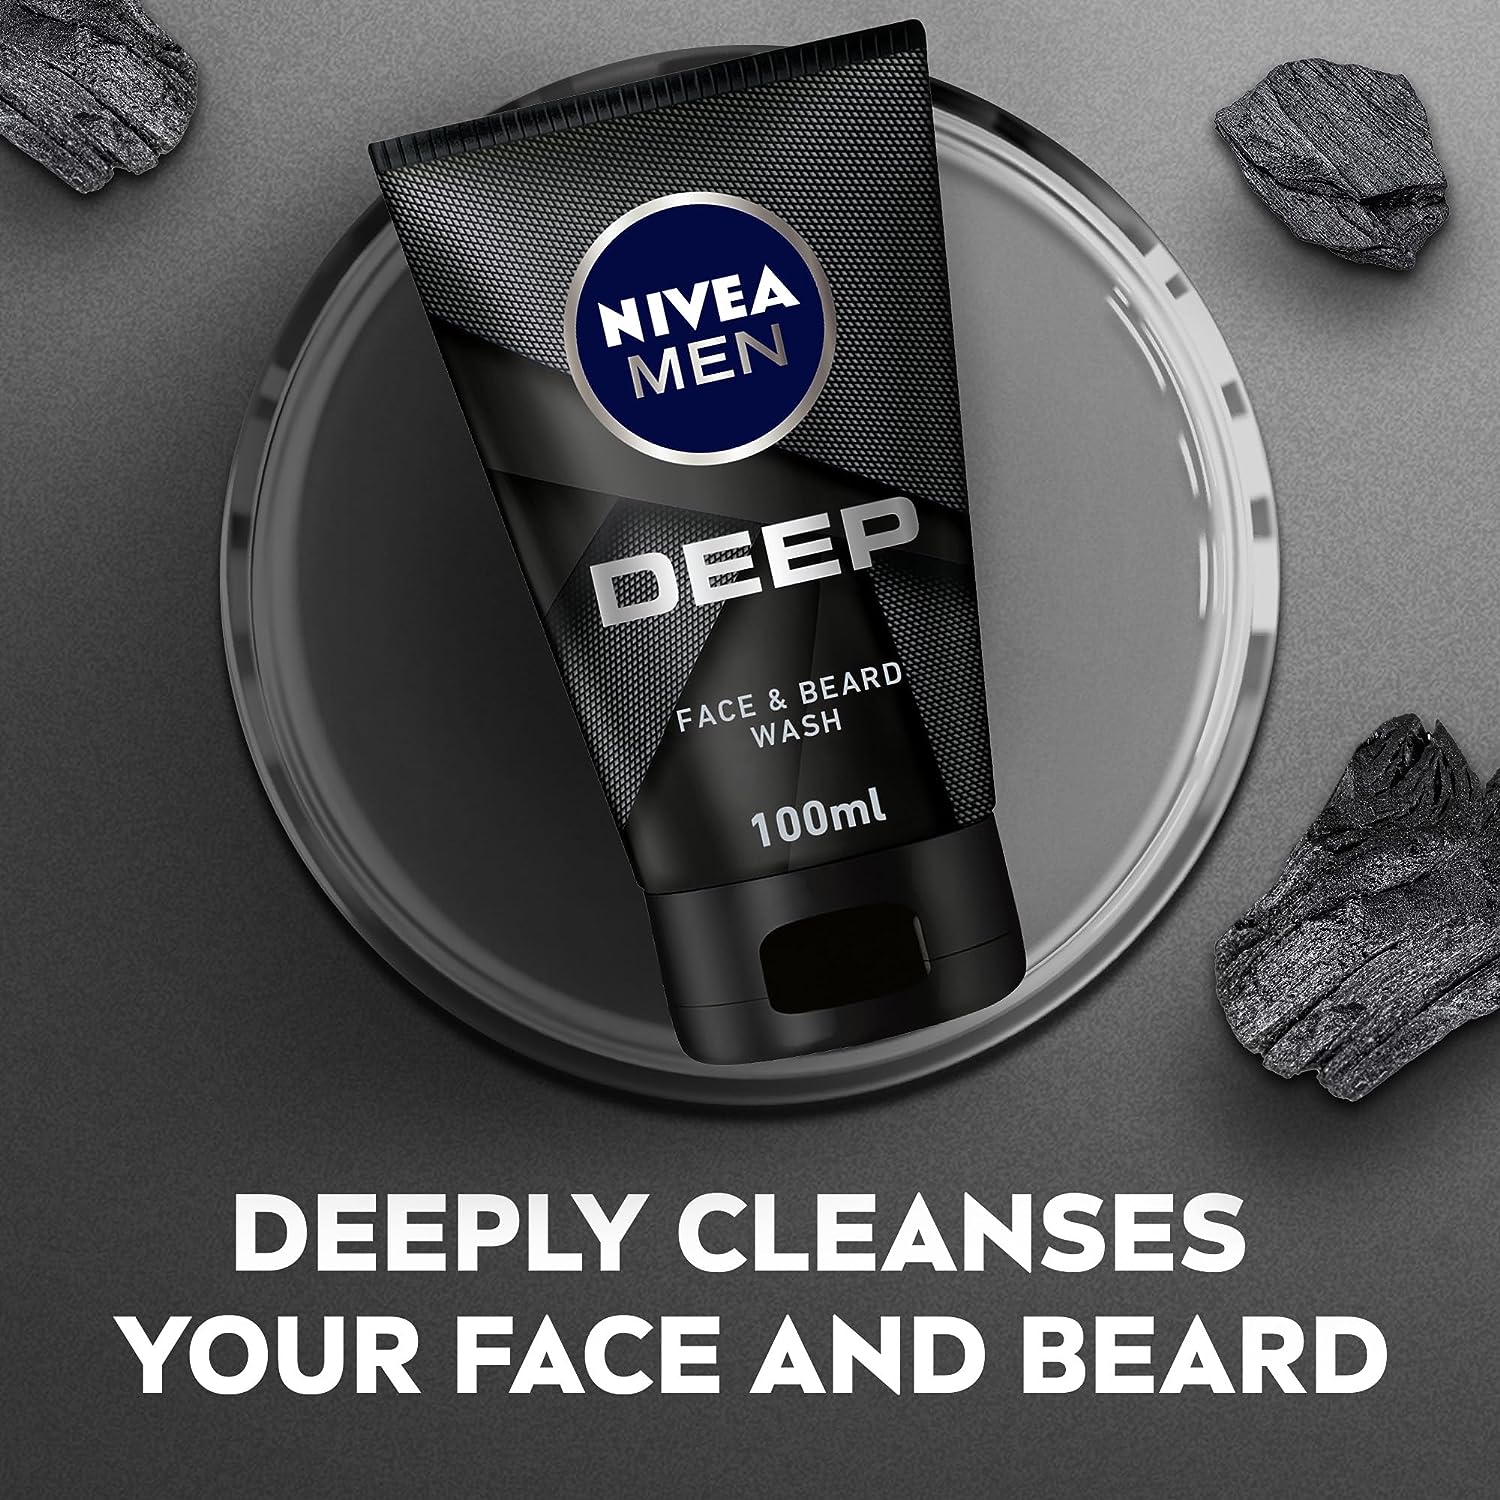 NIVEA MEN Face Beard Wash Cleanser, DEEP Active Charcoal, 100ml